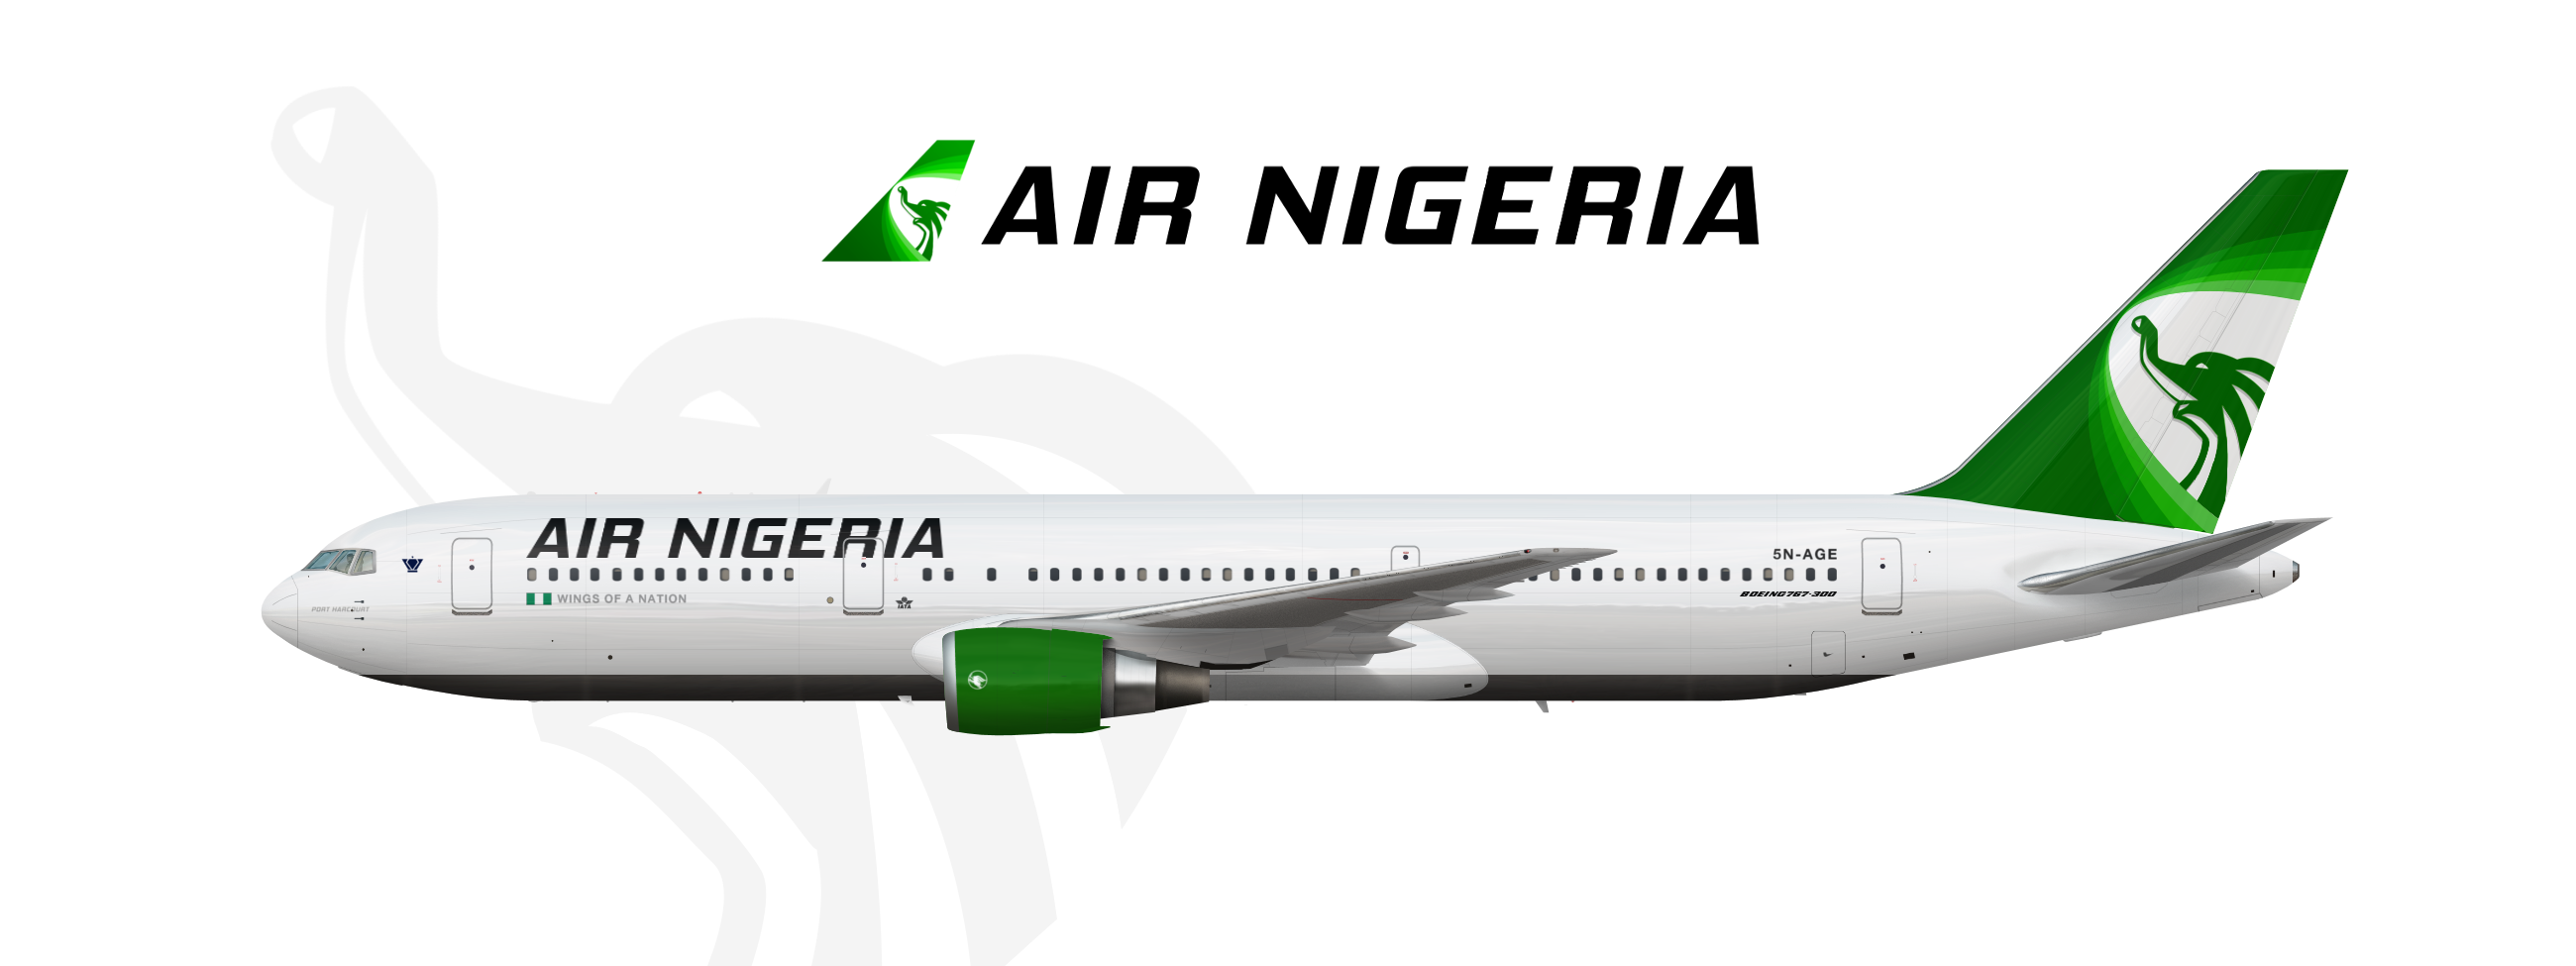 Air Nigeria Boeing 767-300 | 5N-AGE - n design archive 201old-2018 -  Gallery - Airline Empires